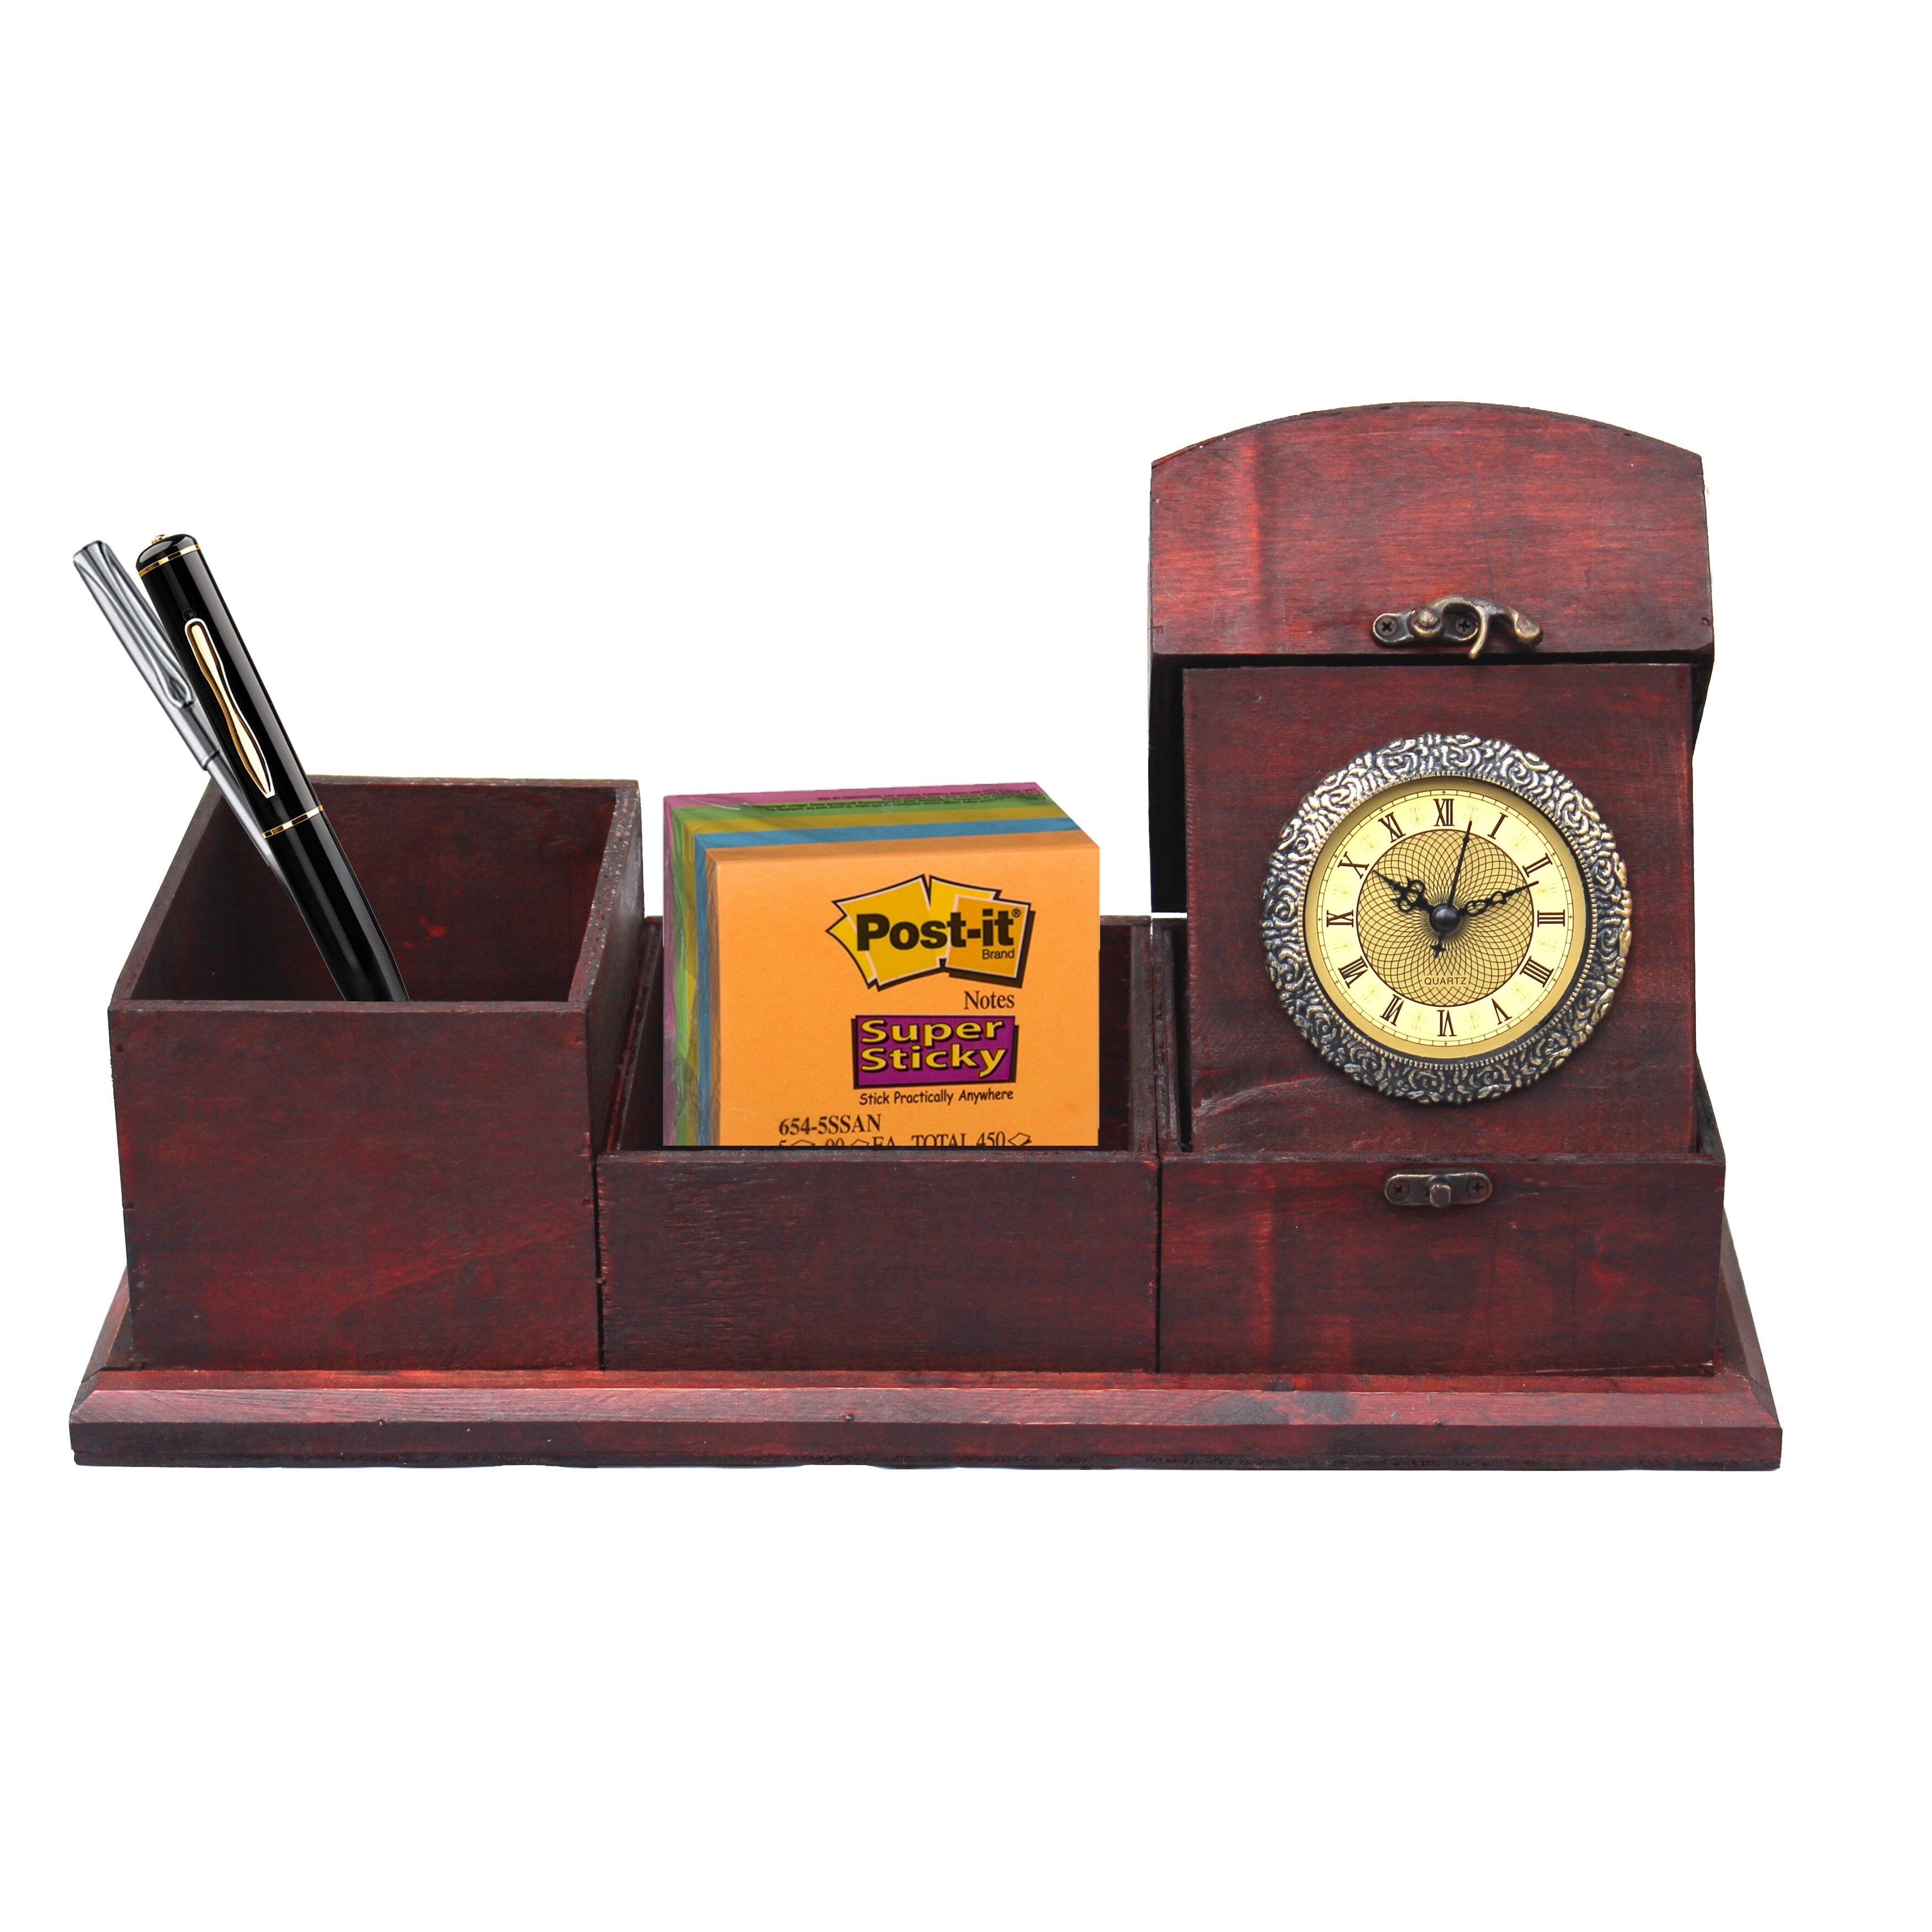 Shop Antique Cherry Wood Style Desk Organizer Overstock 10187176